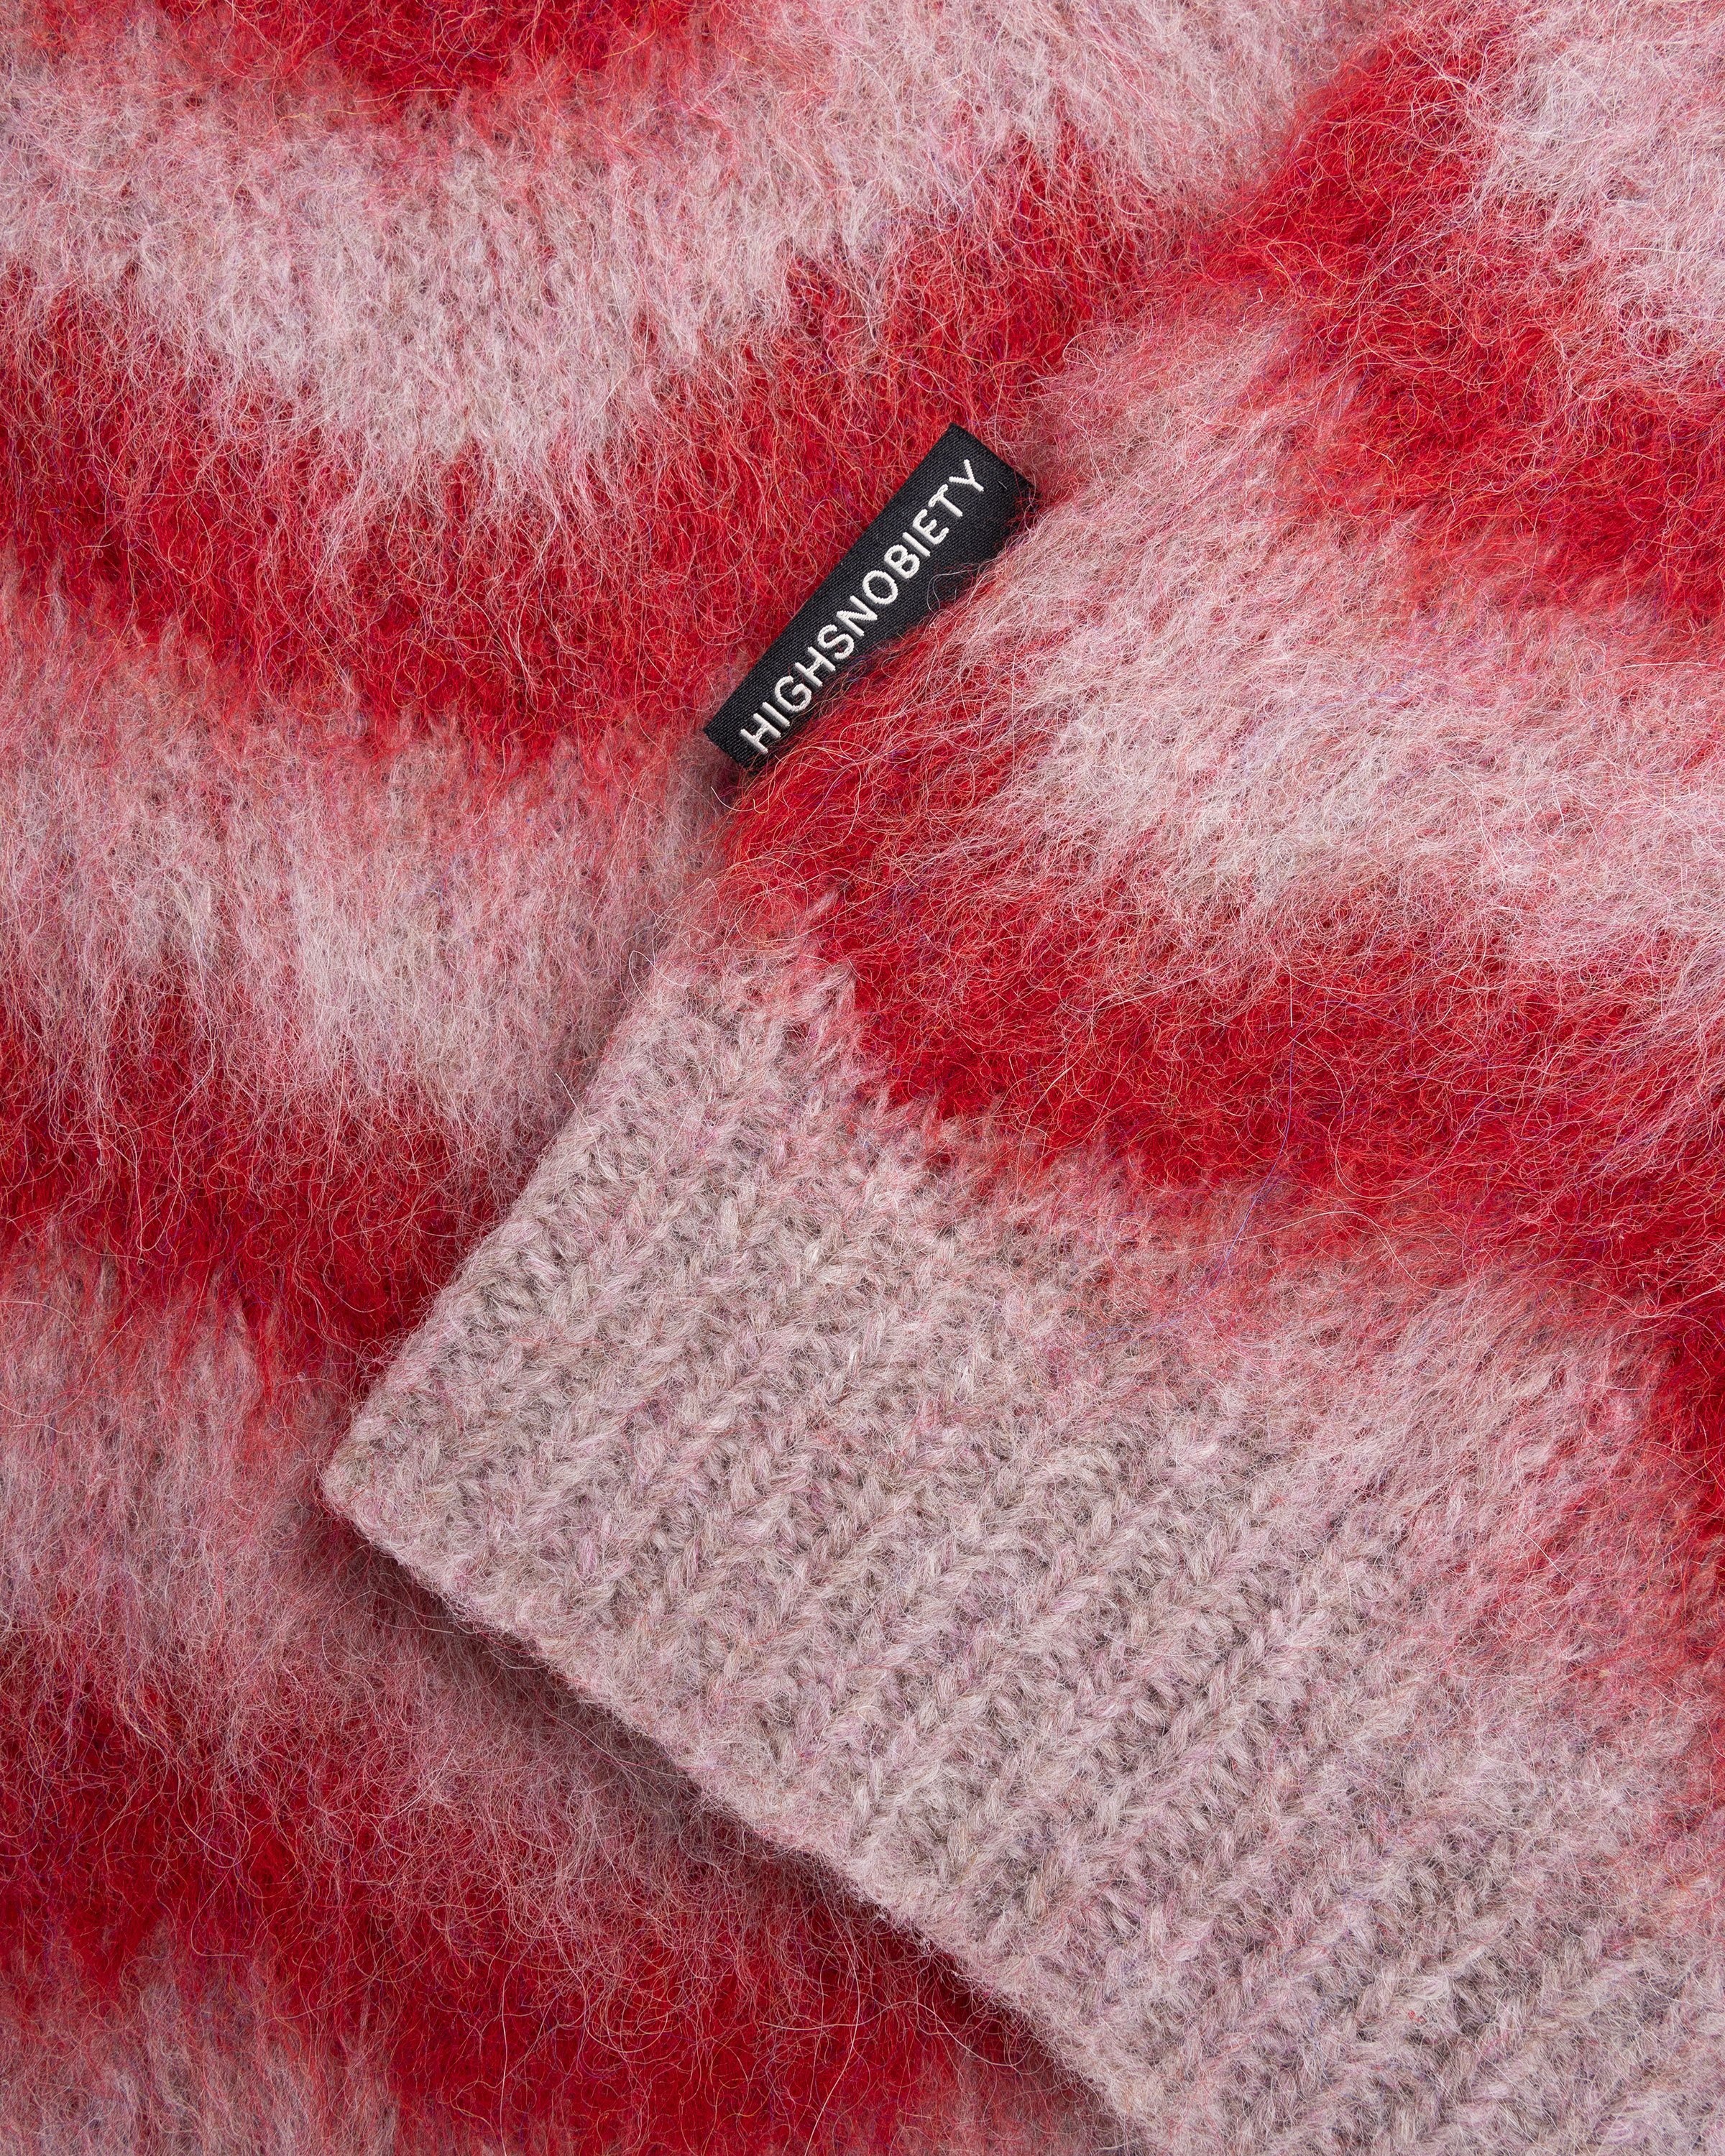 Highsnobiety HS05 – Alpaca Fuzzy Wave Sweater Vest Pale Rose/Red - Knitwear - Multi - Image 7